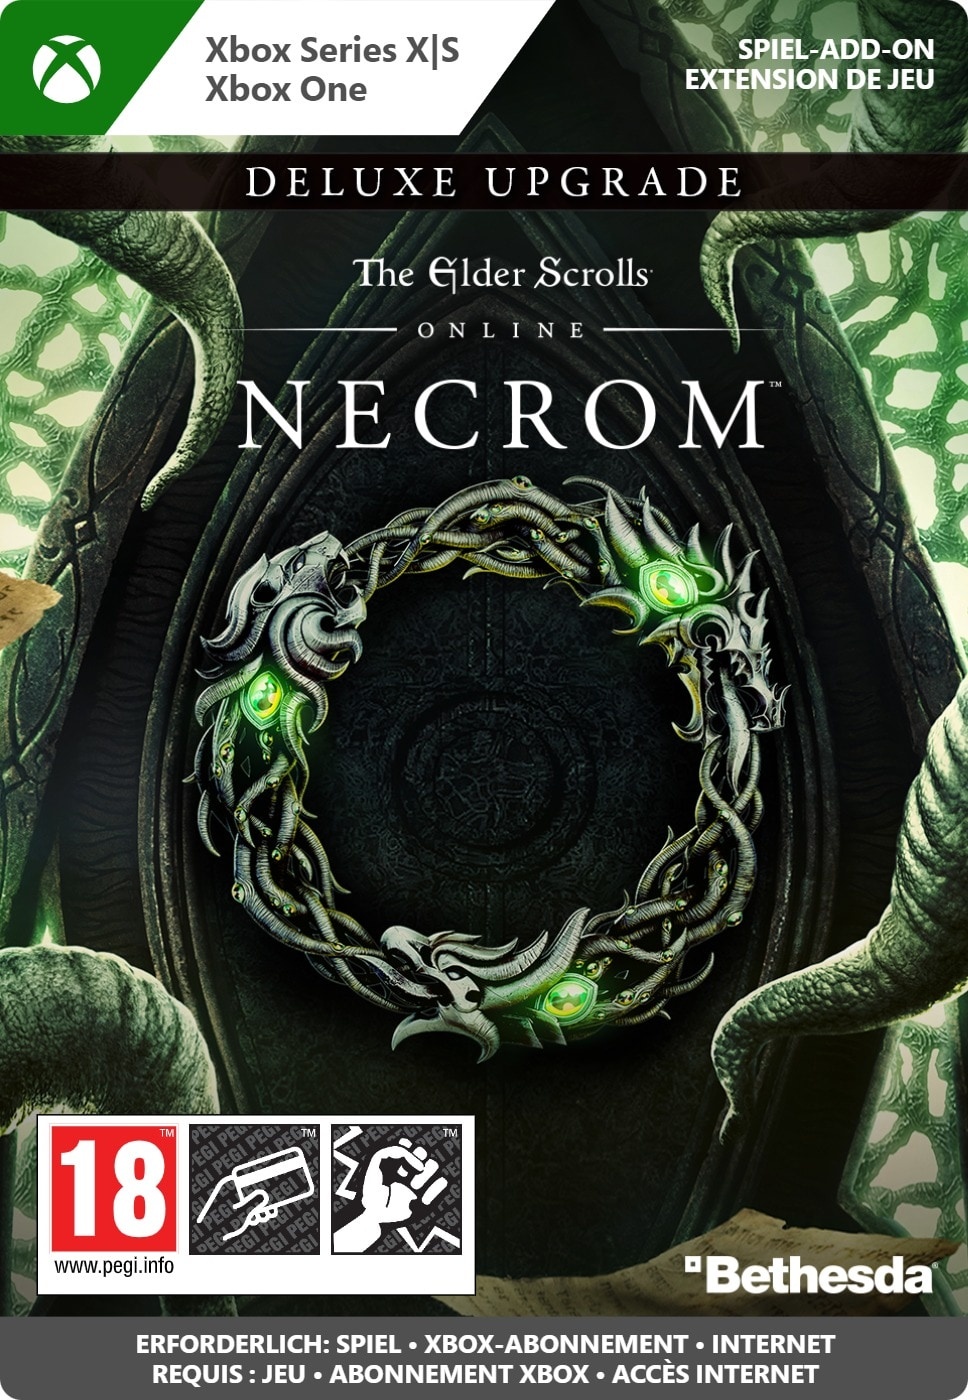 Xbox The Elder Scrolls Online Deluxe Upgrade Necrom Download Code (Xbox) zum Sofortdownload